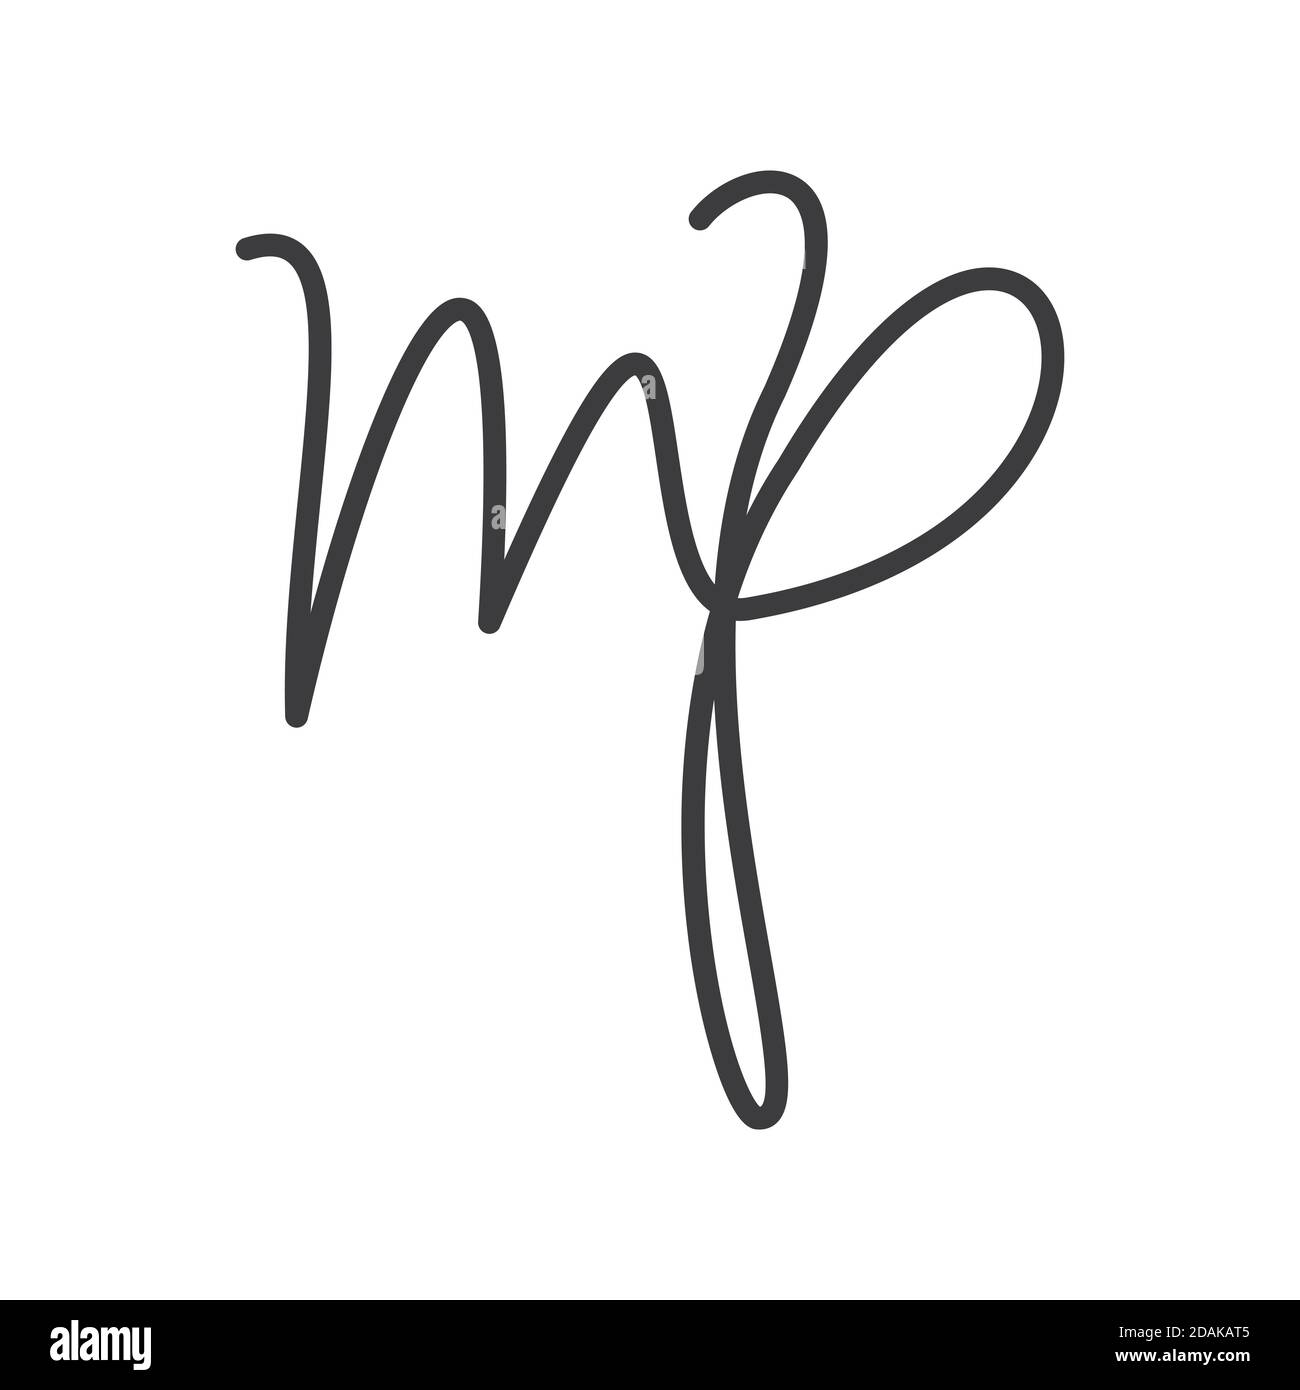 Mp Or Pm Letter Logo Design Template Vector Stock Illustration - Download  Image Now - Logo, Member of Parliament, Monogram - iStock